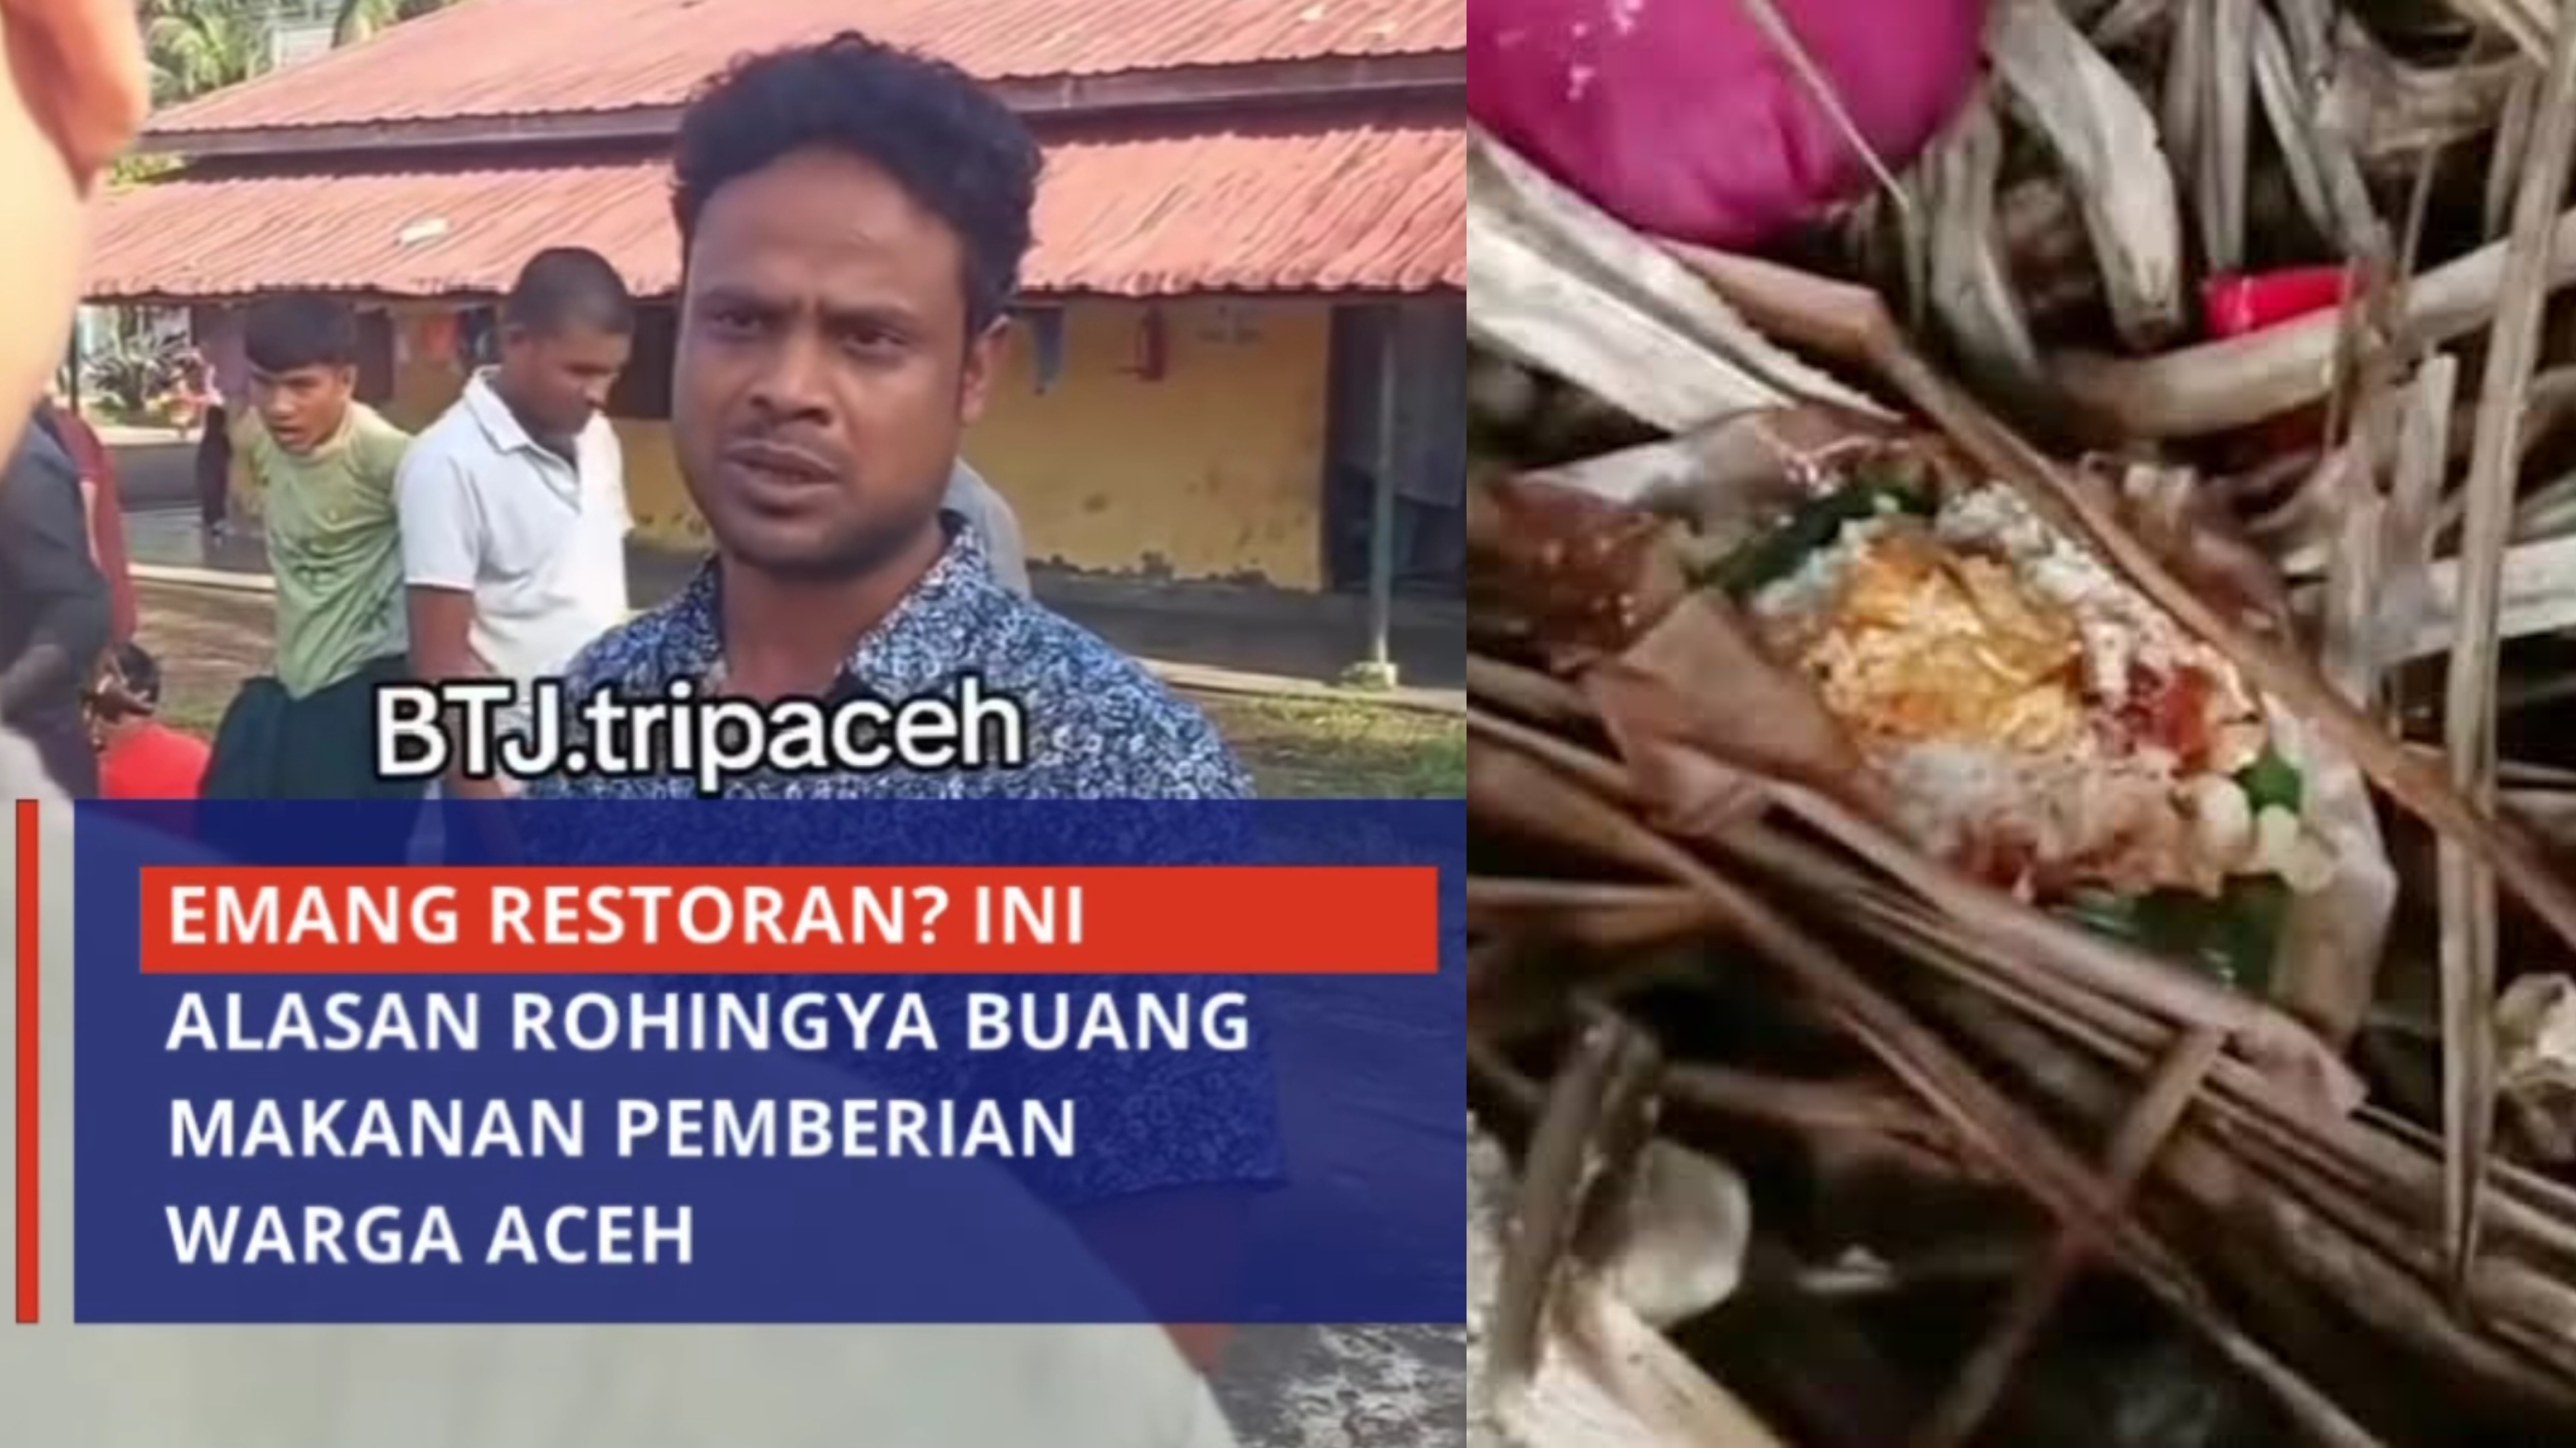 Emang Restoran? Ini Alasan Pengungsi Rohingya Buang Makanan Pemberian Warga Aceh